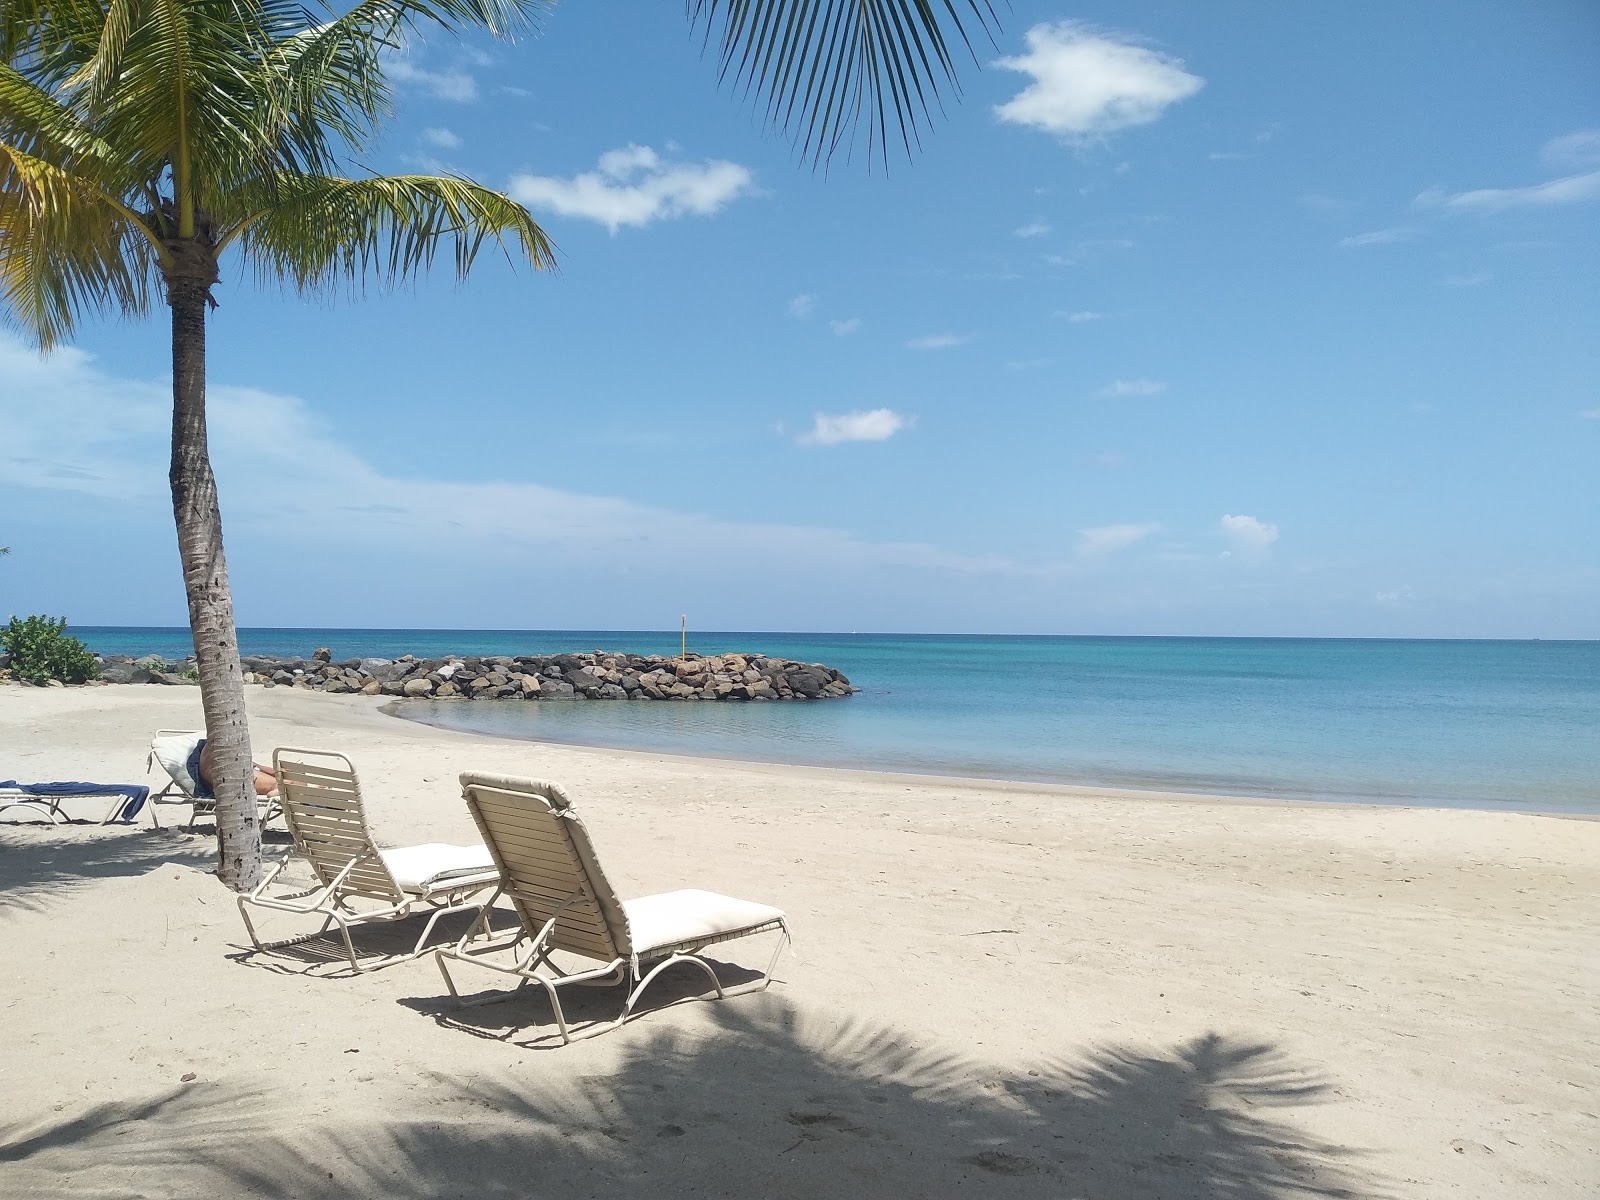 Photo of Vigie beach - popular place among relax connoisseurs